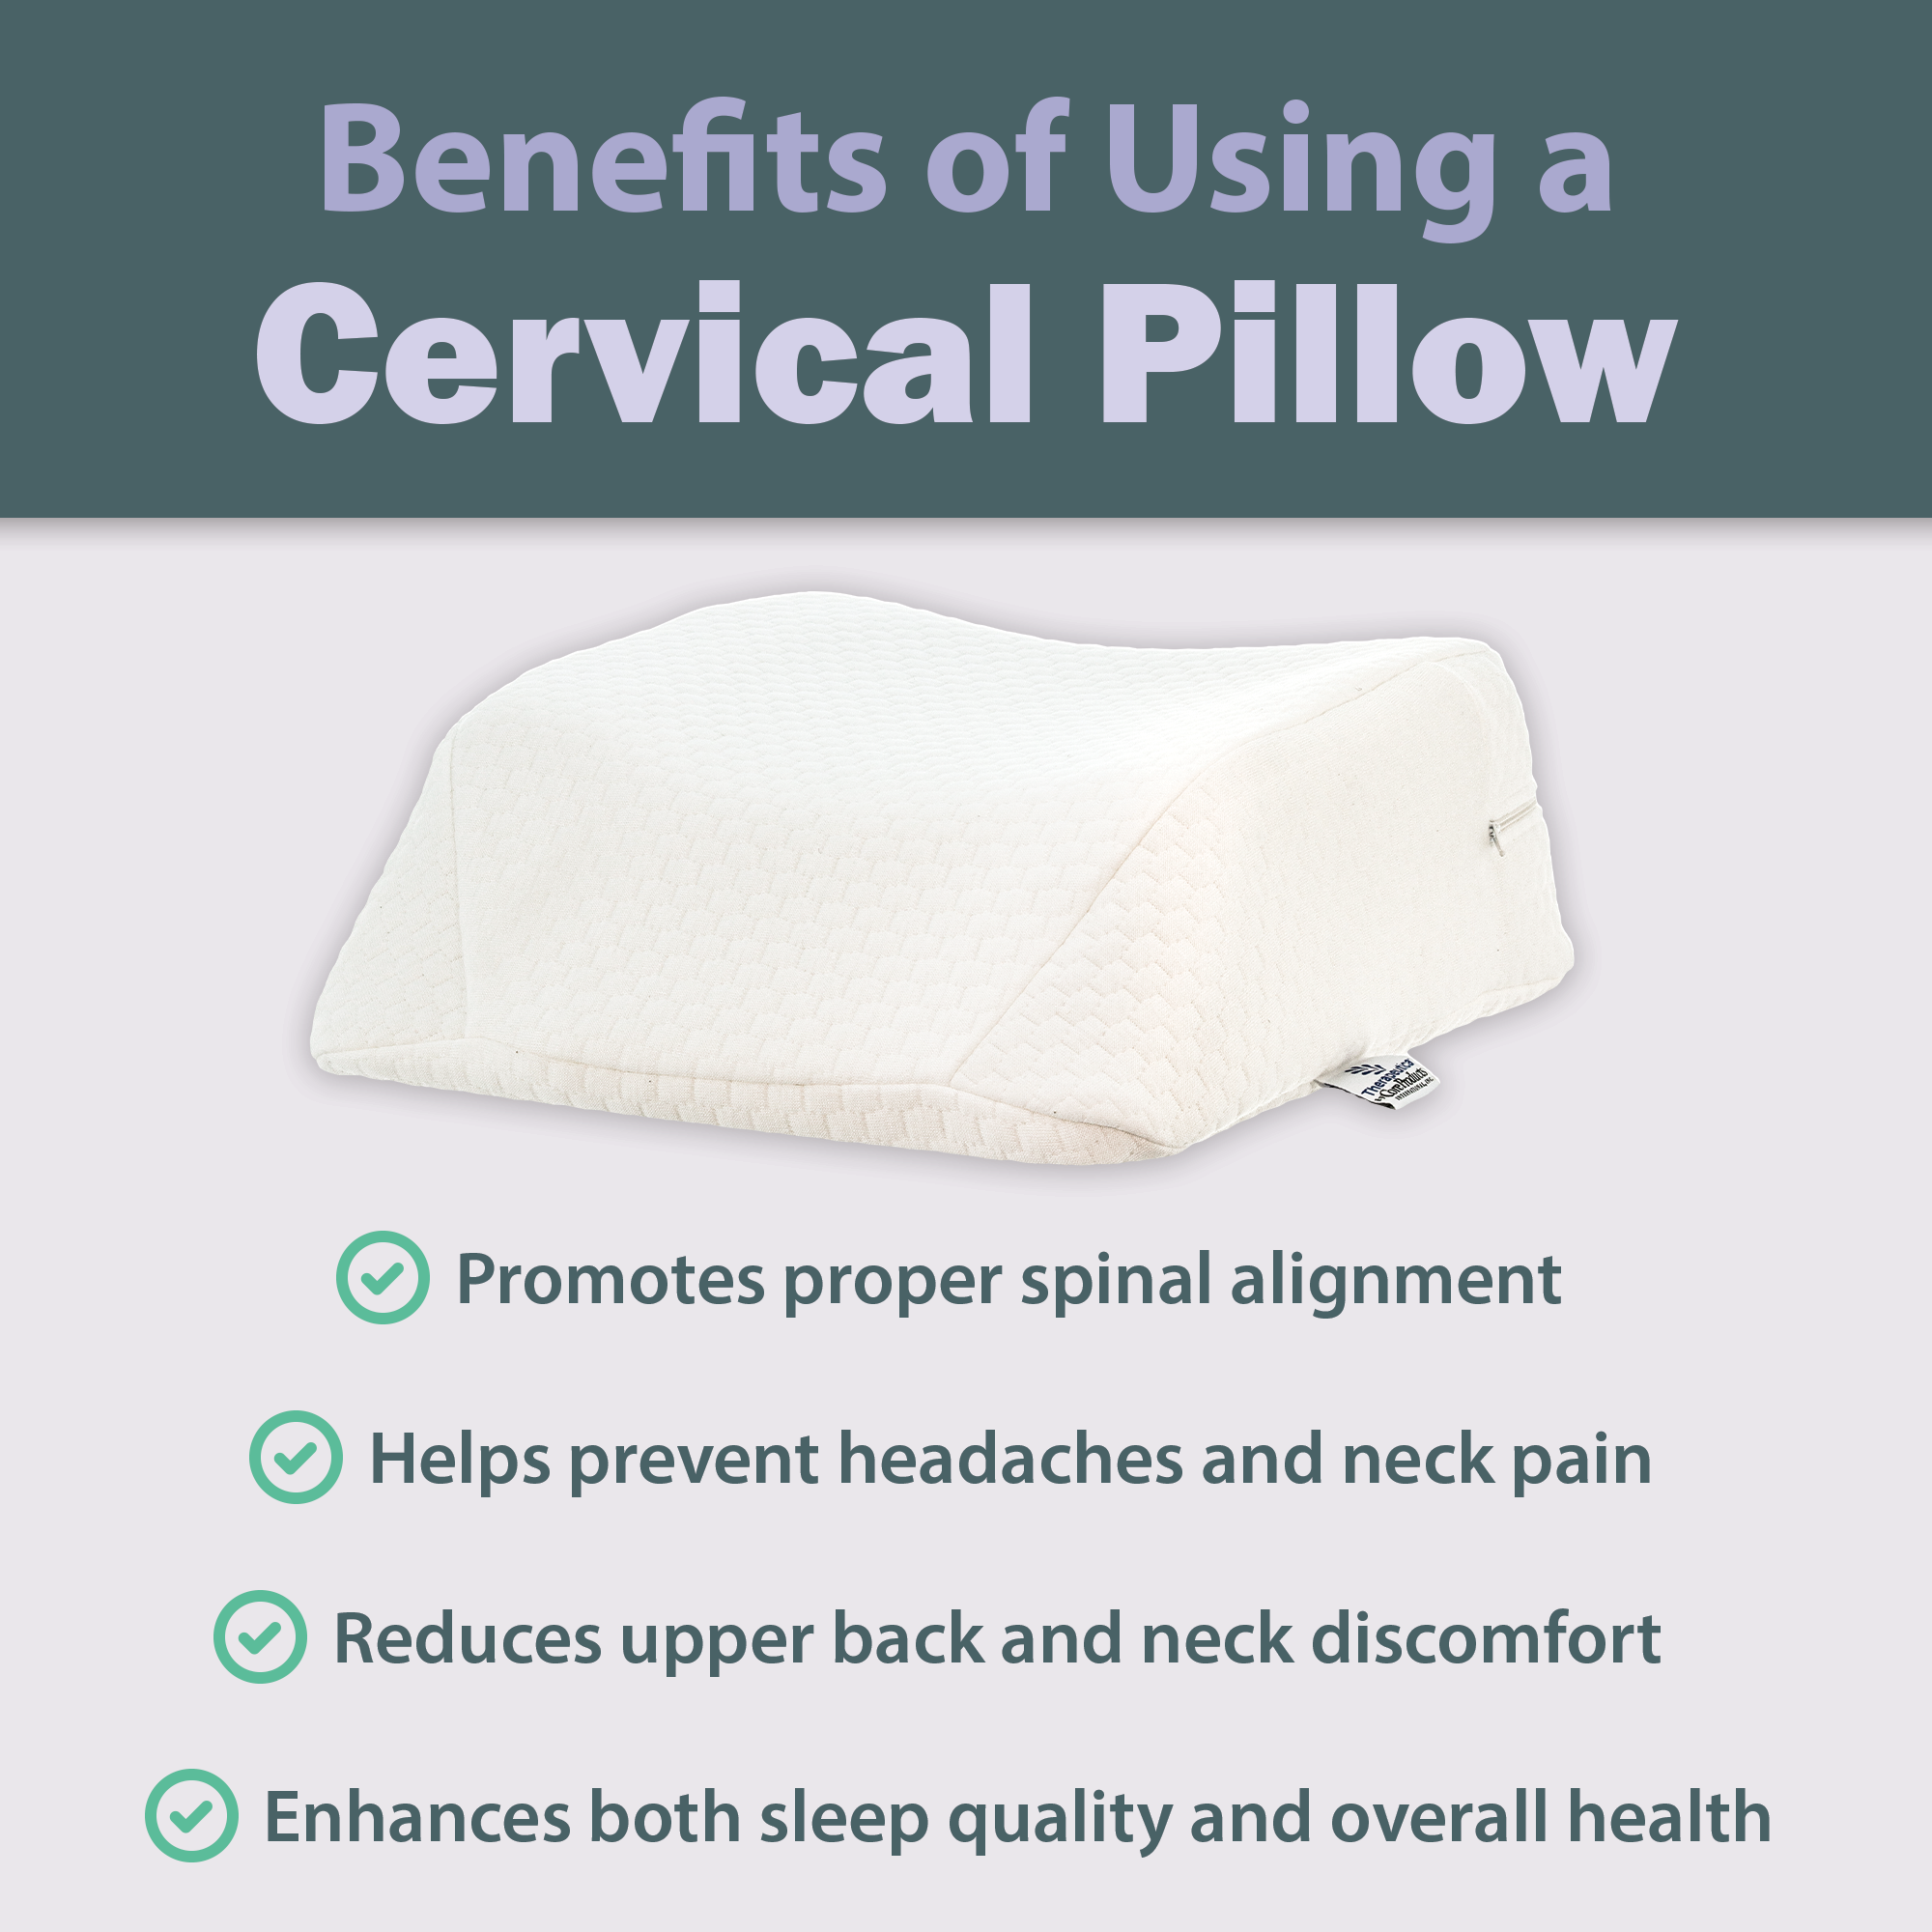 Therapeutica Travel Pillow